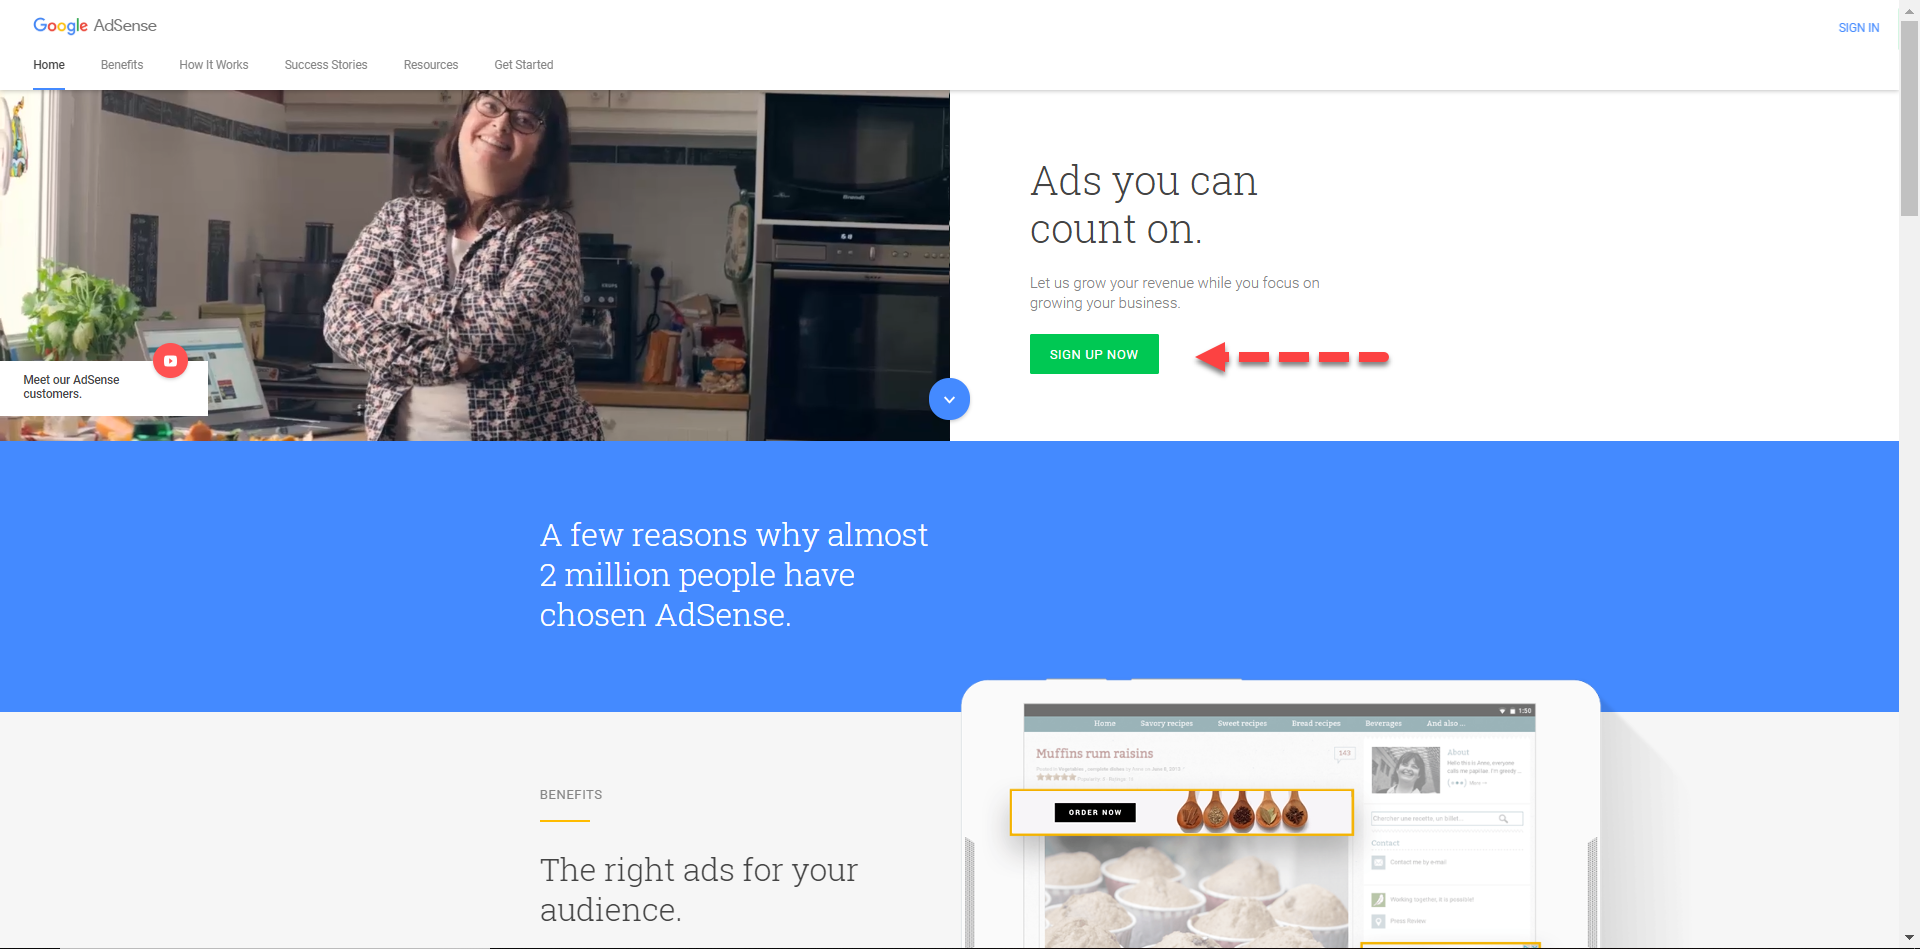 Step 1 - Google AdSense Home Page